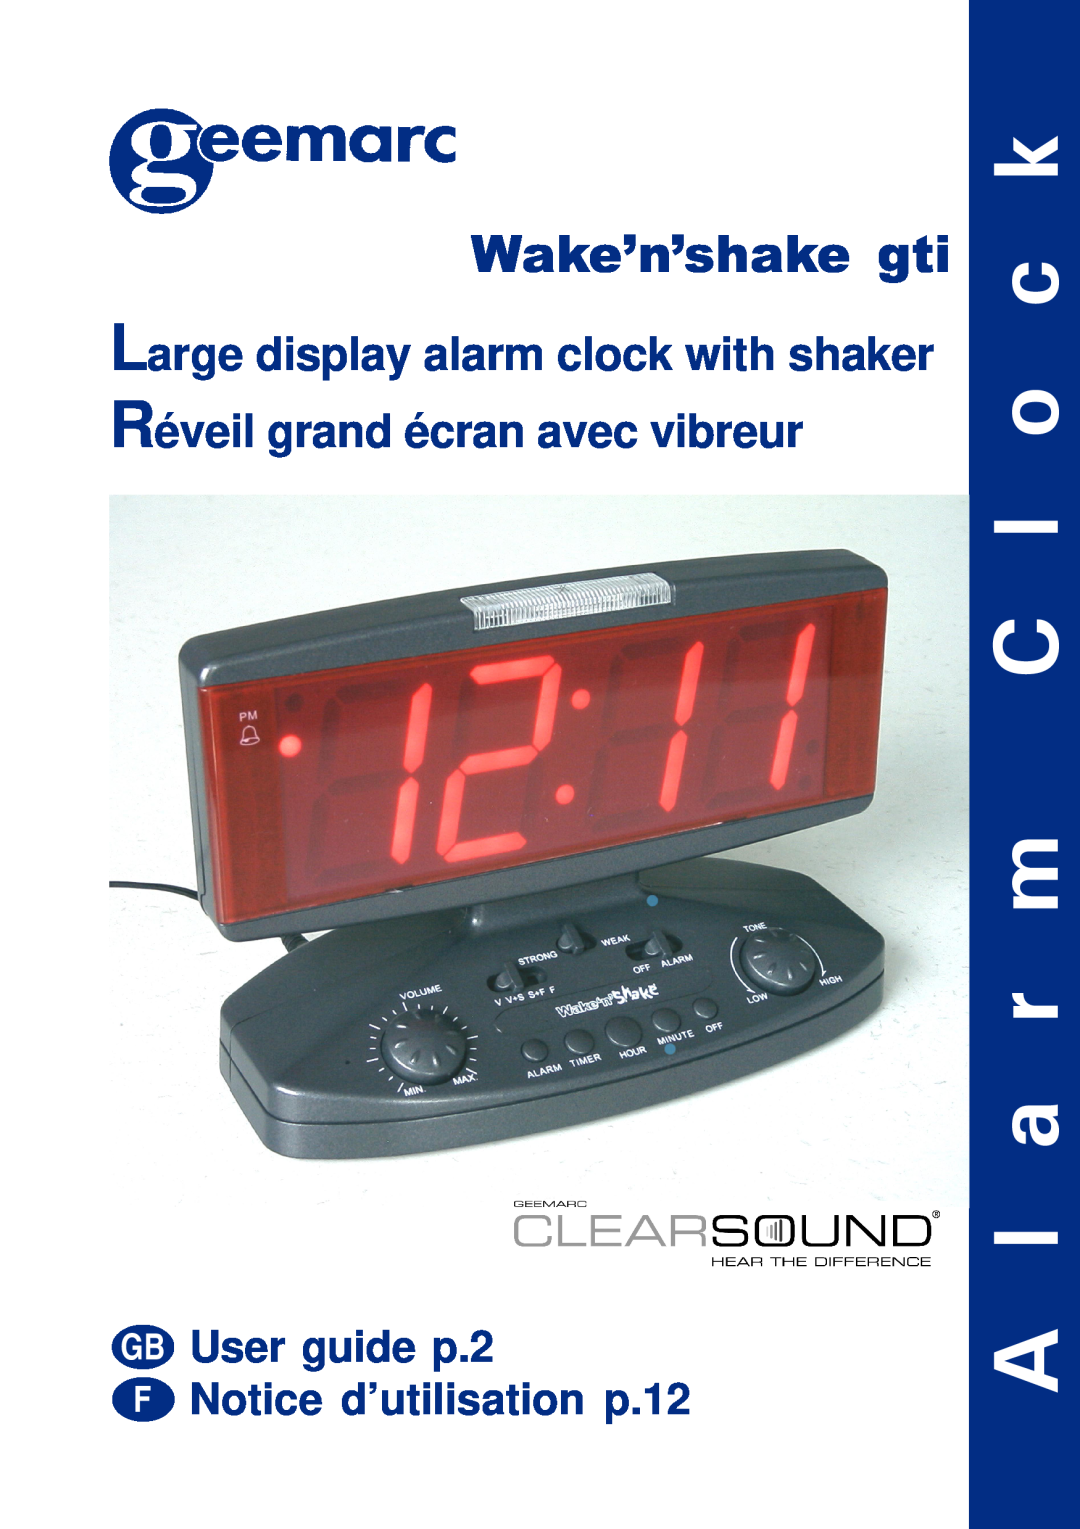 Geemarc Large Display Alarm Clock manual C l o c k A l a r m, Wake’n’shake gti 